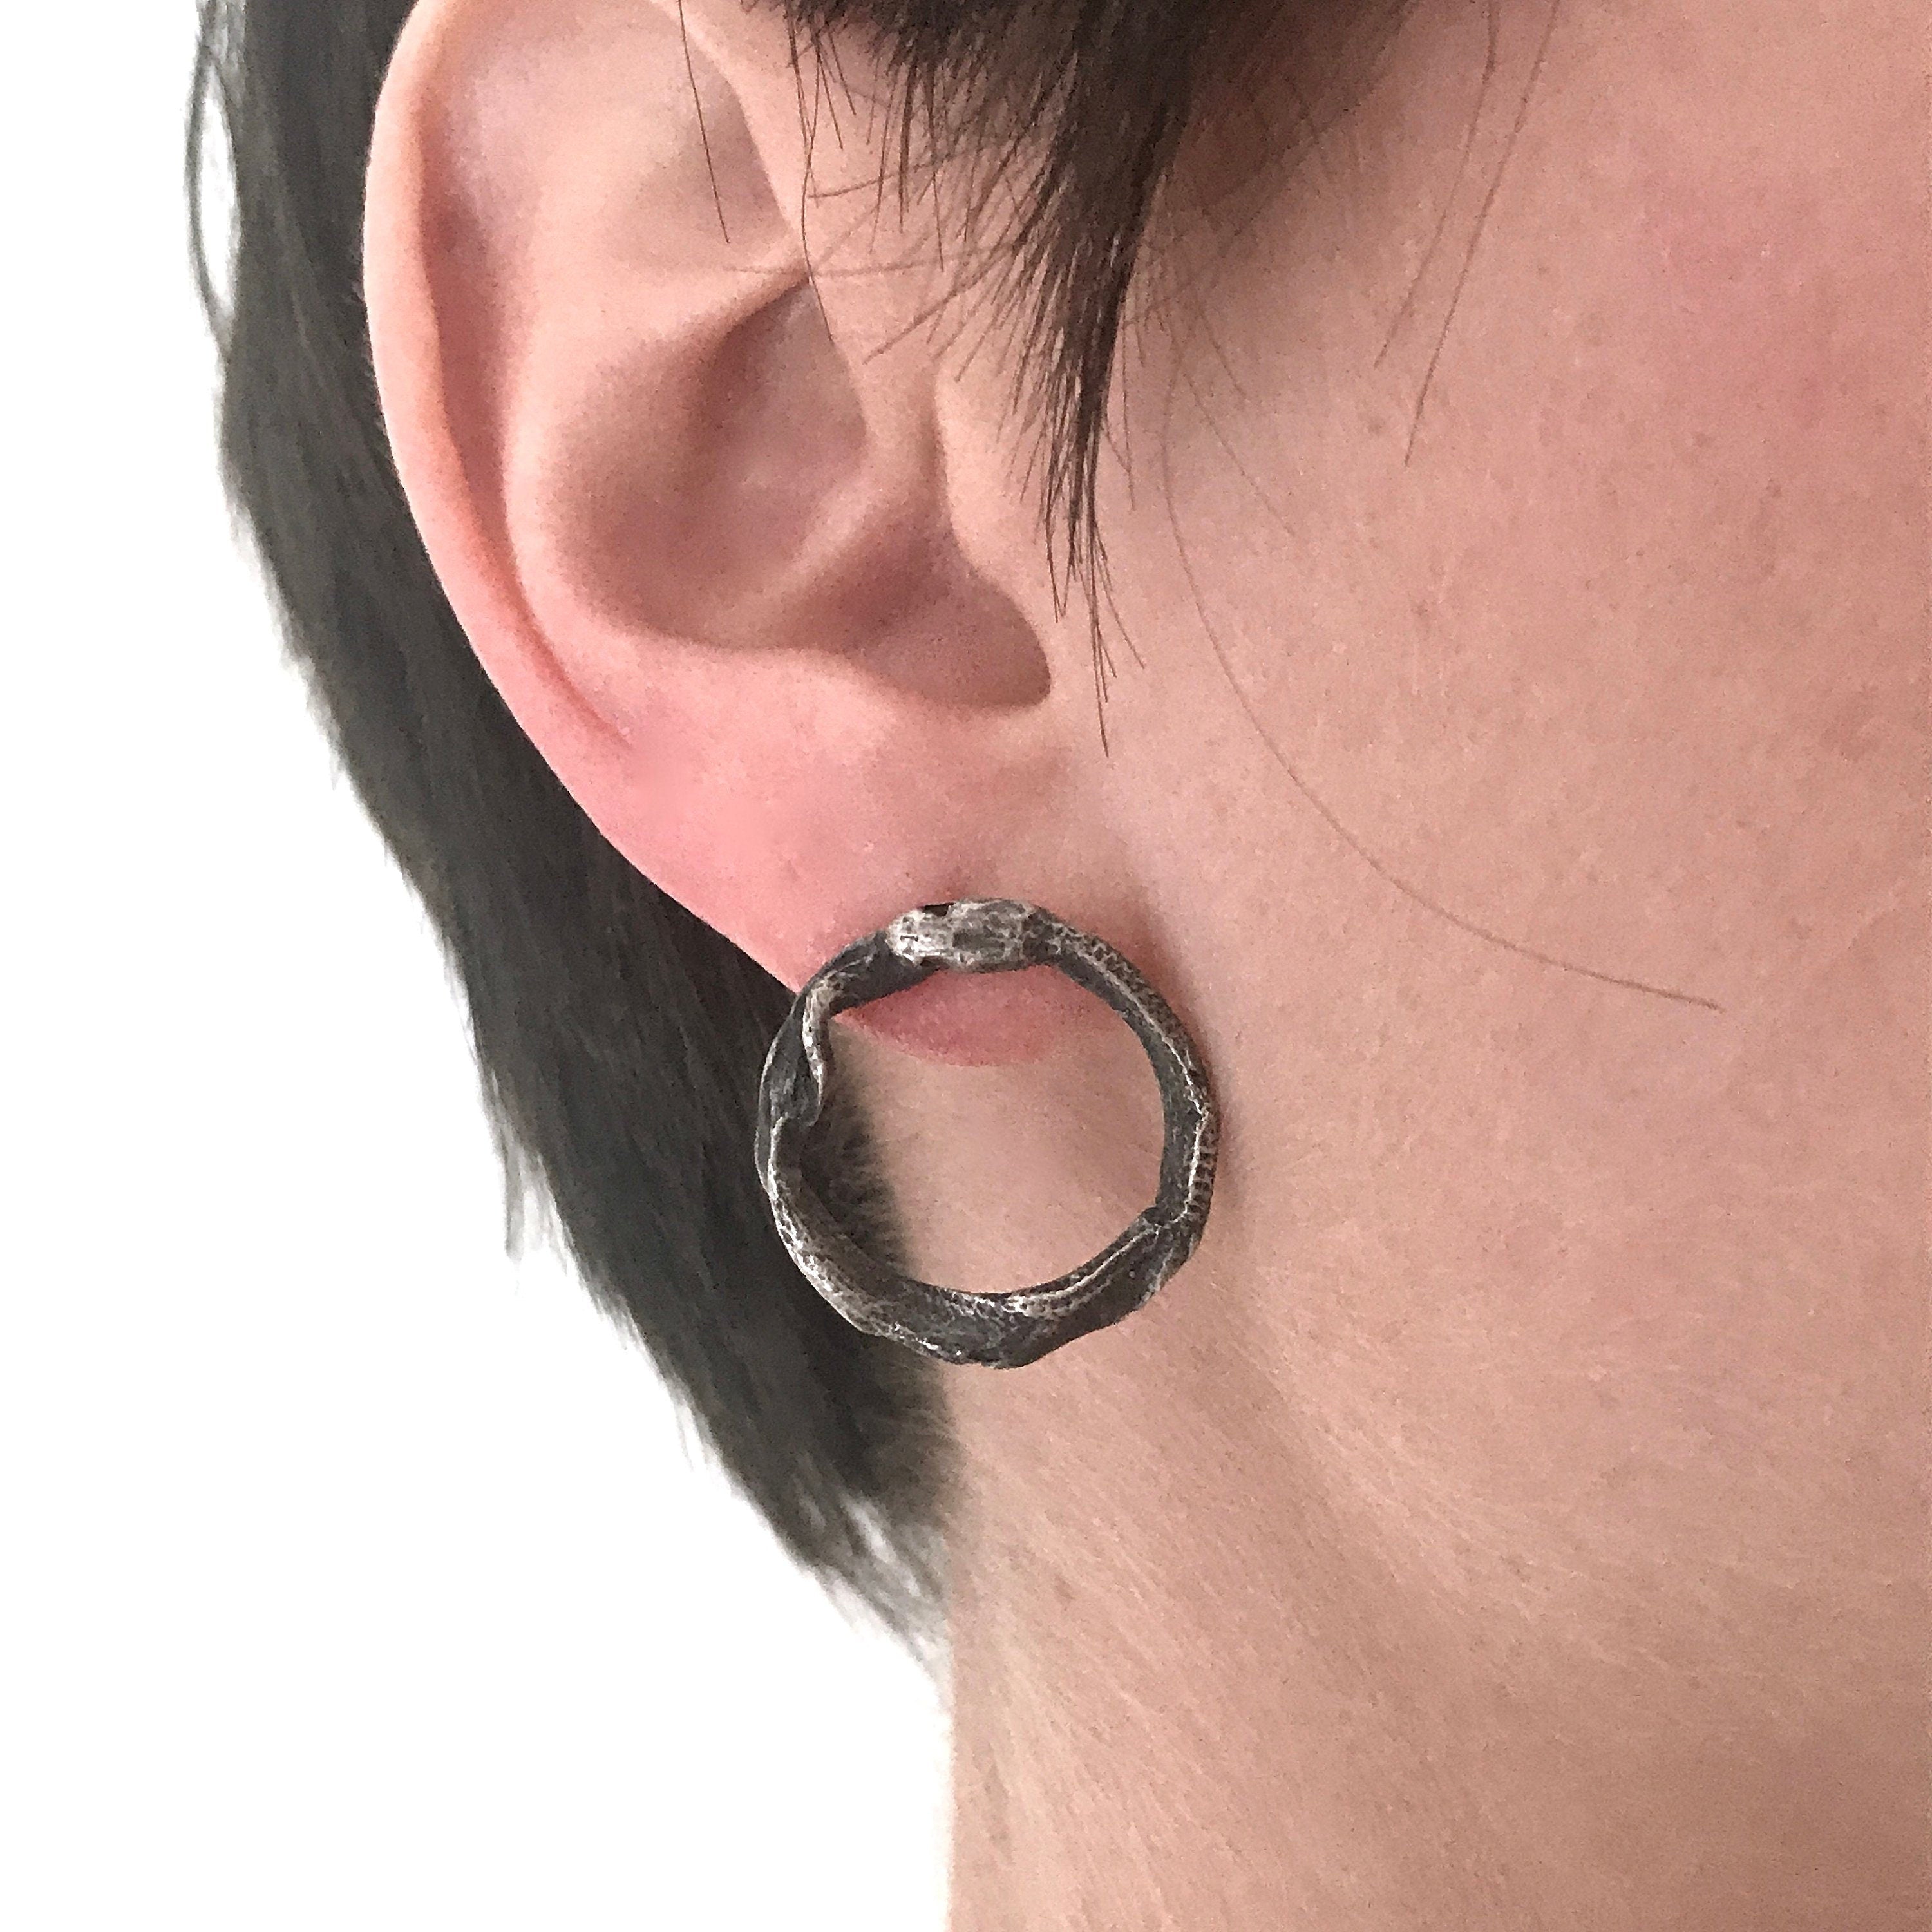 Ouroboros Ear Studs Earrings - Ready to Ship